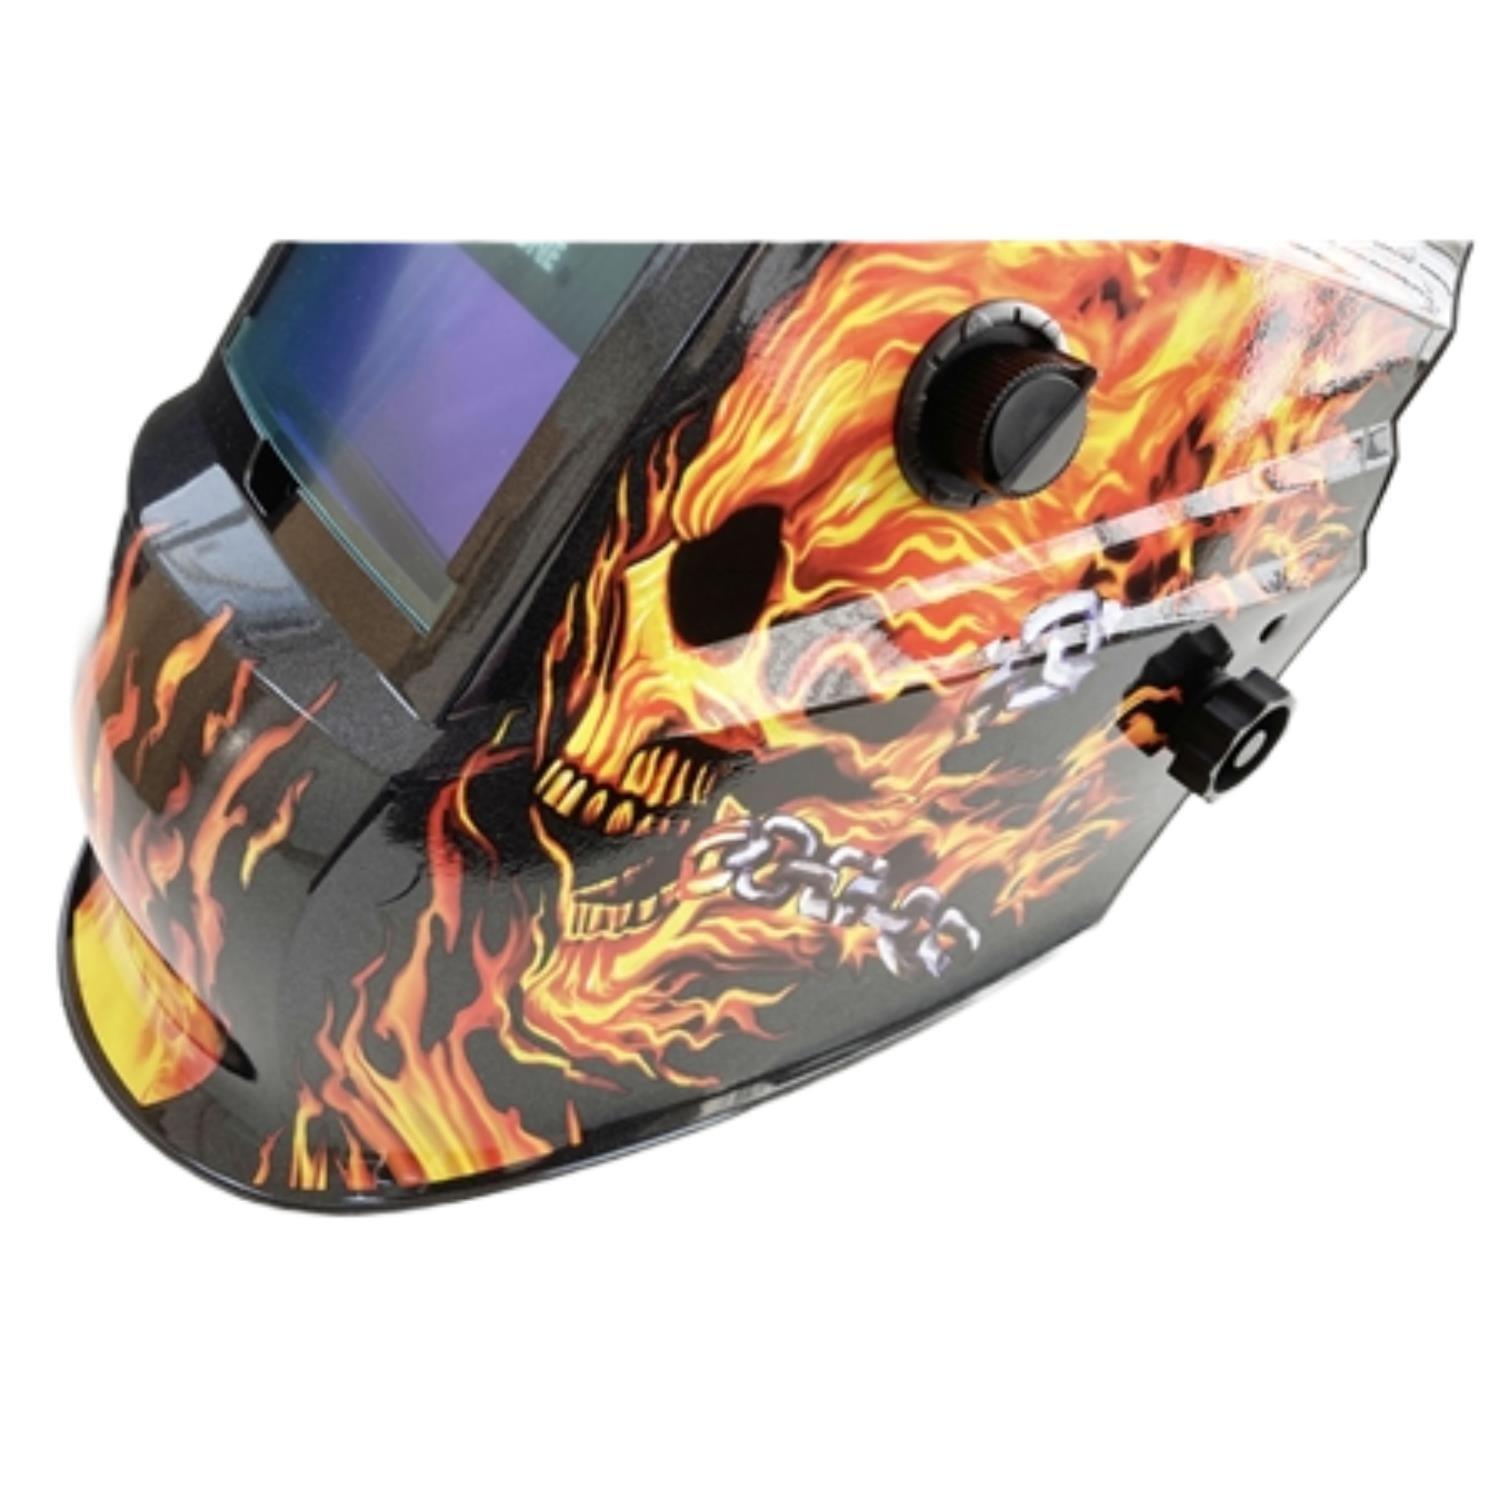 Toolzone Welding Helmet Fire Design Variable Control Grinding Mode WH046 - Tools 2U Direct SW